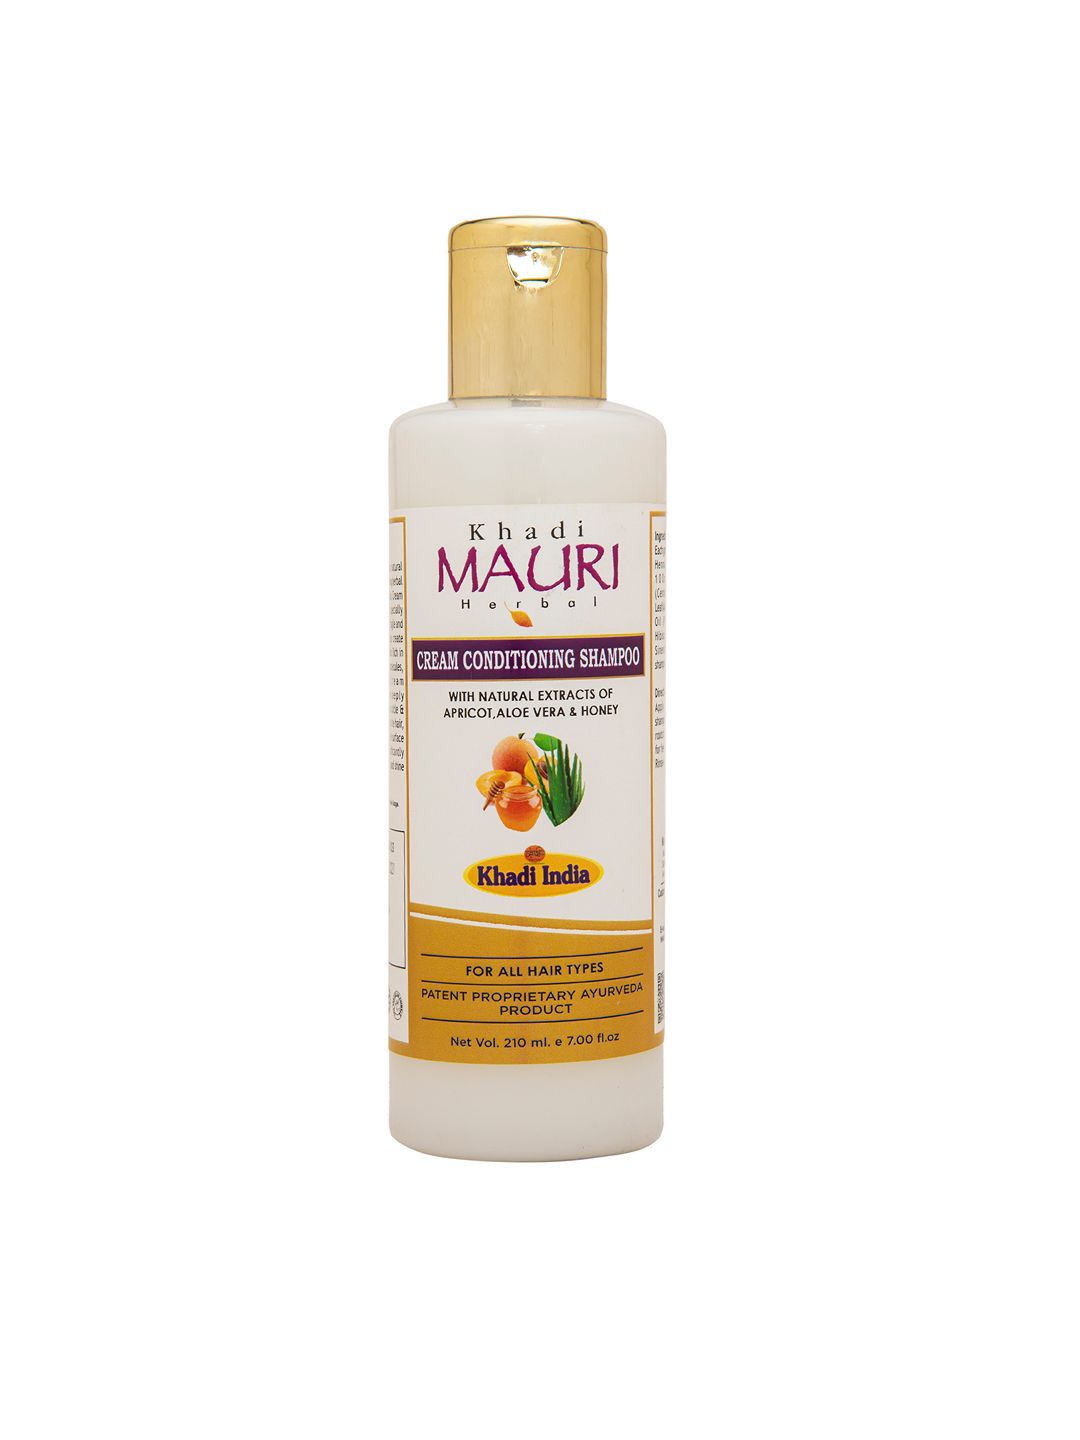 Khadi Mauri Herbal Cream Conditioning  Shampoo with Apricot & Aloe Vera - 210 ml Price in India